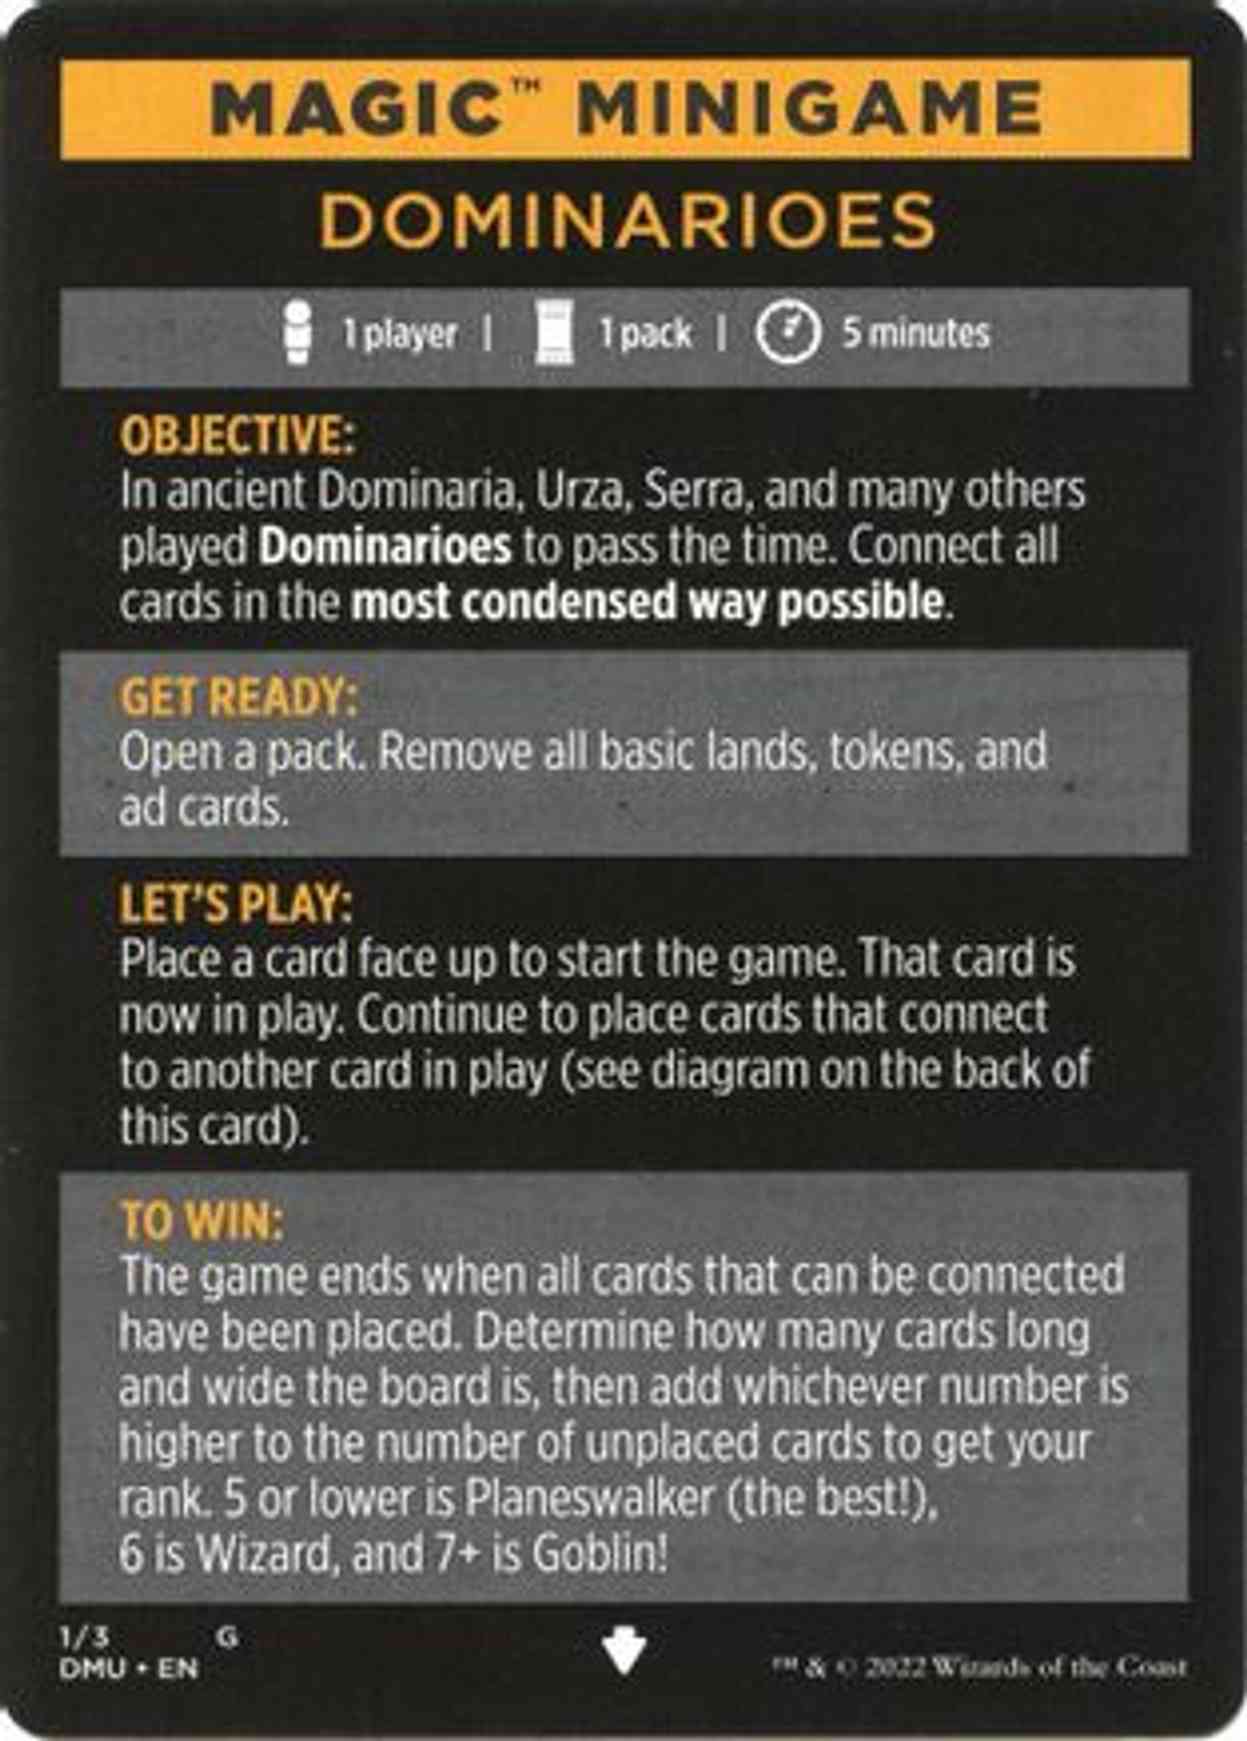 Magic Minigame: Dominarioes magic card front